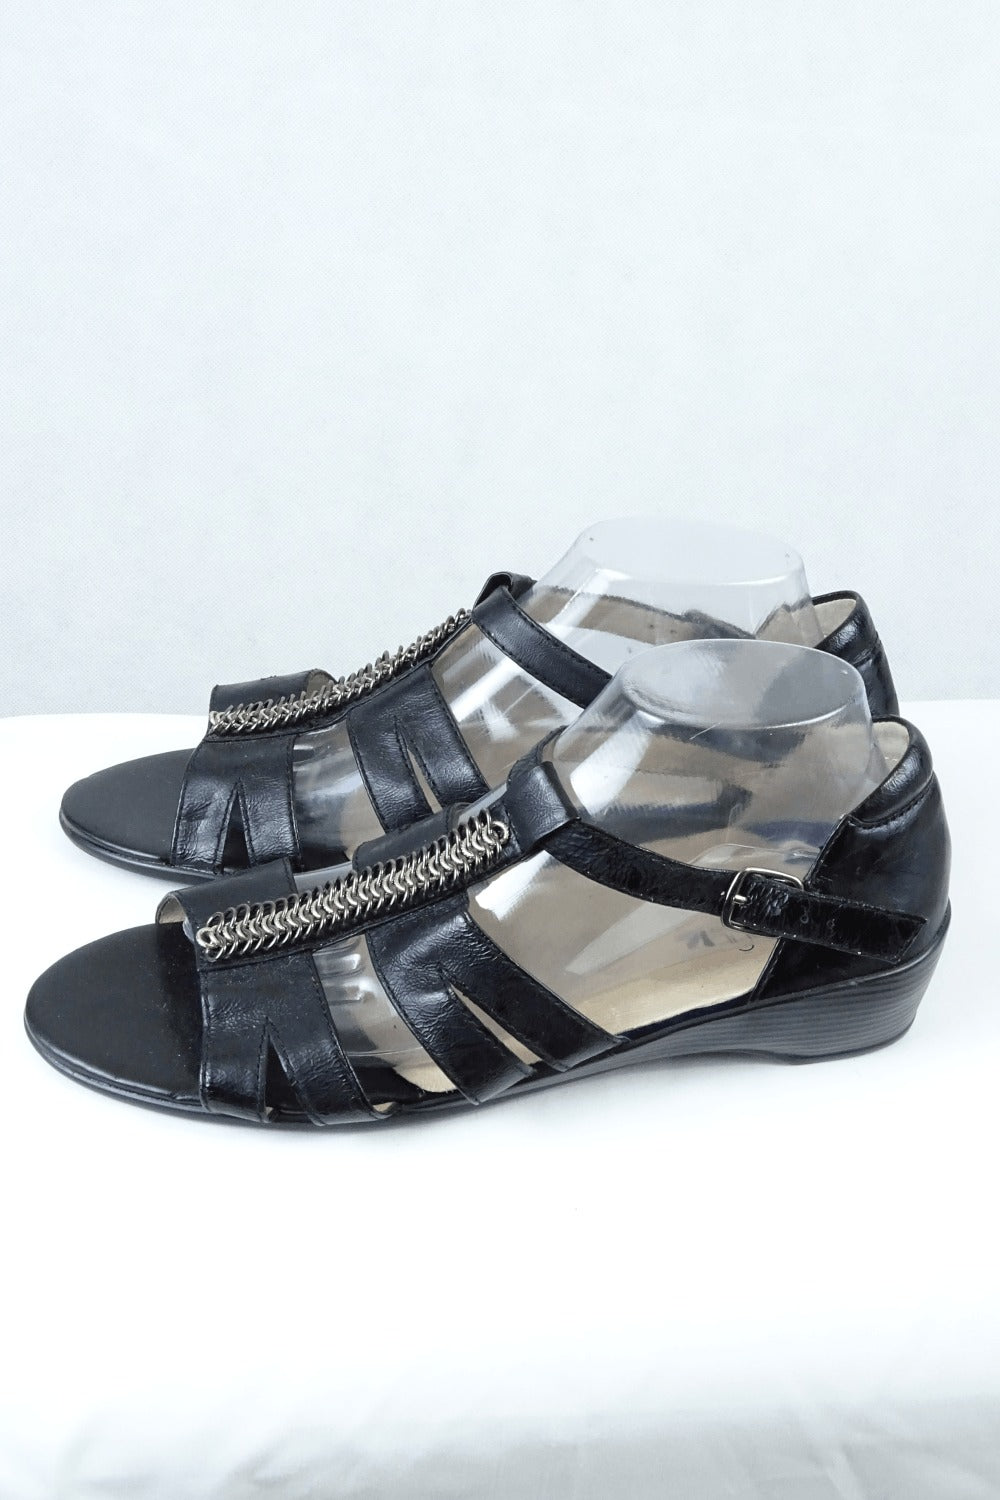 Diana Ferrari Black Sandals10